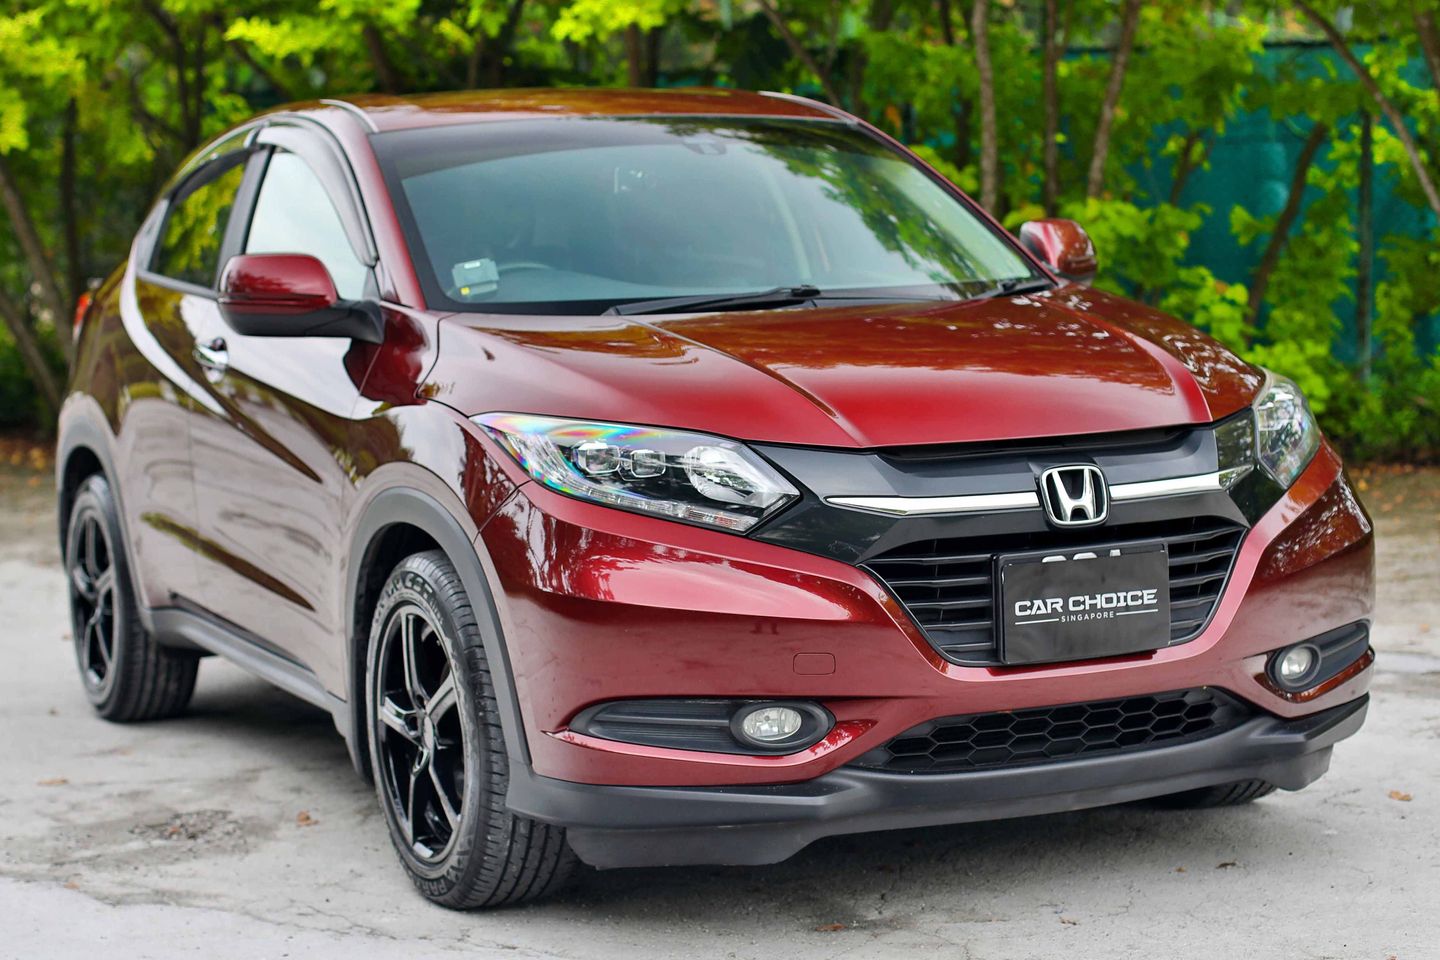 Certified Pre-Owned Honda Vezel 1.5 X | Car Choice Singapore